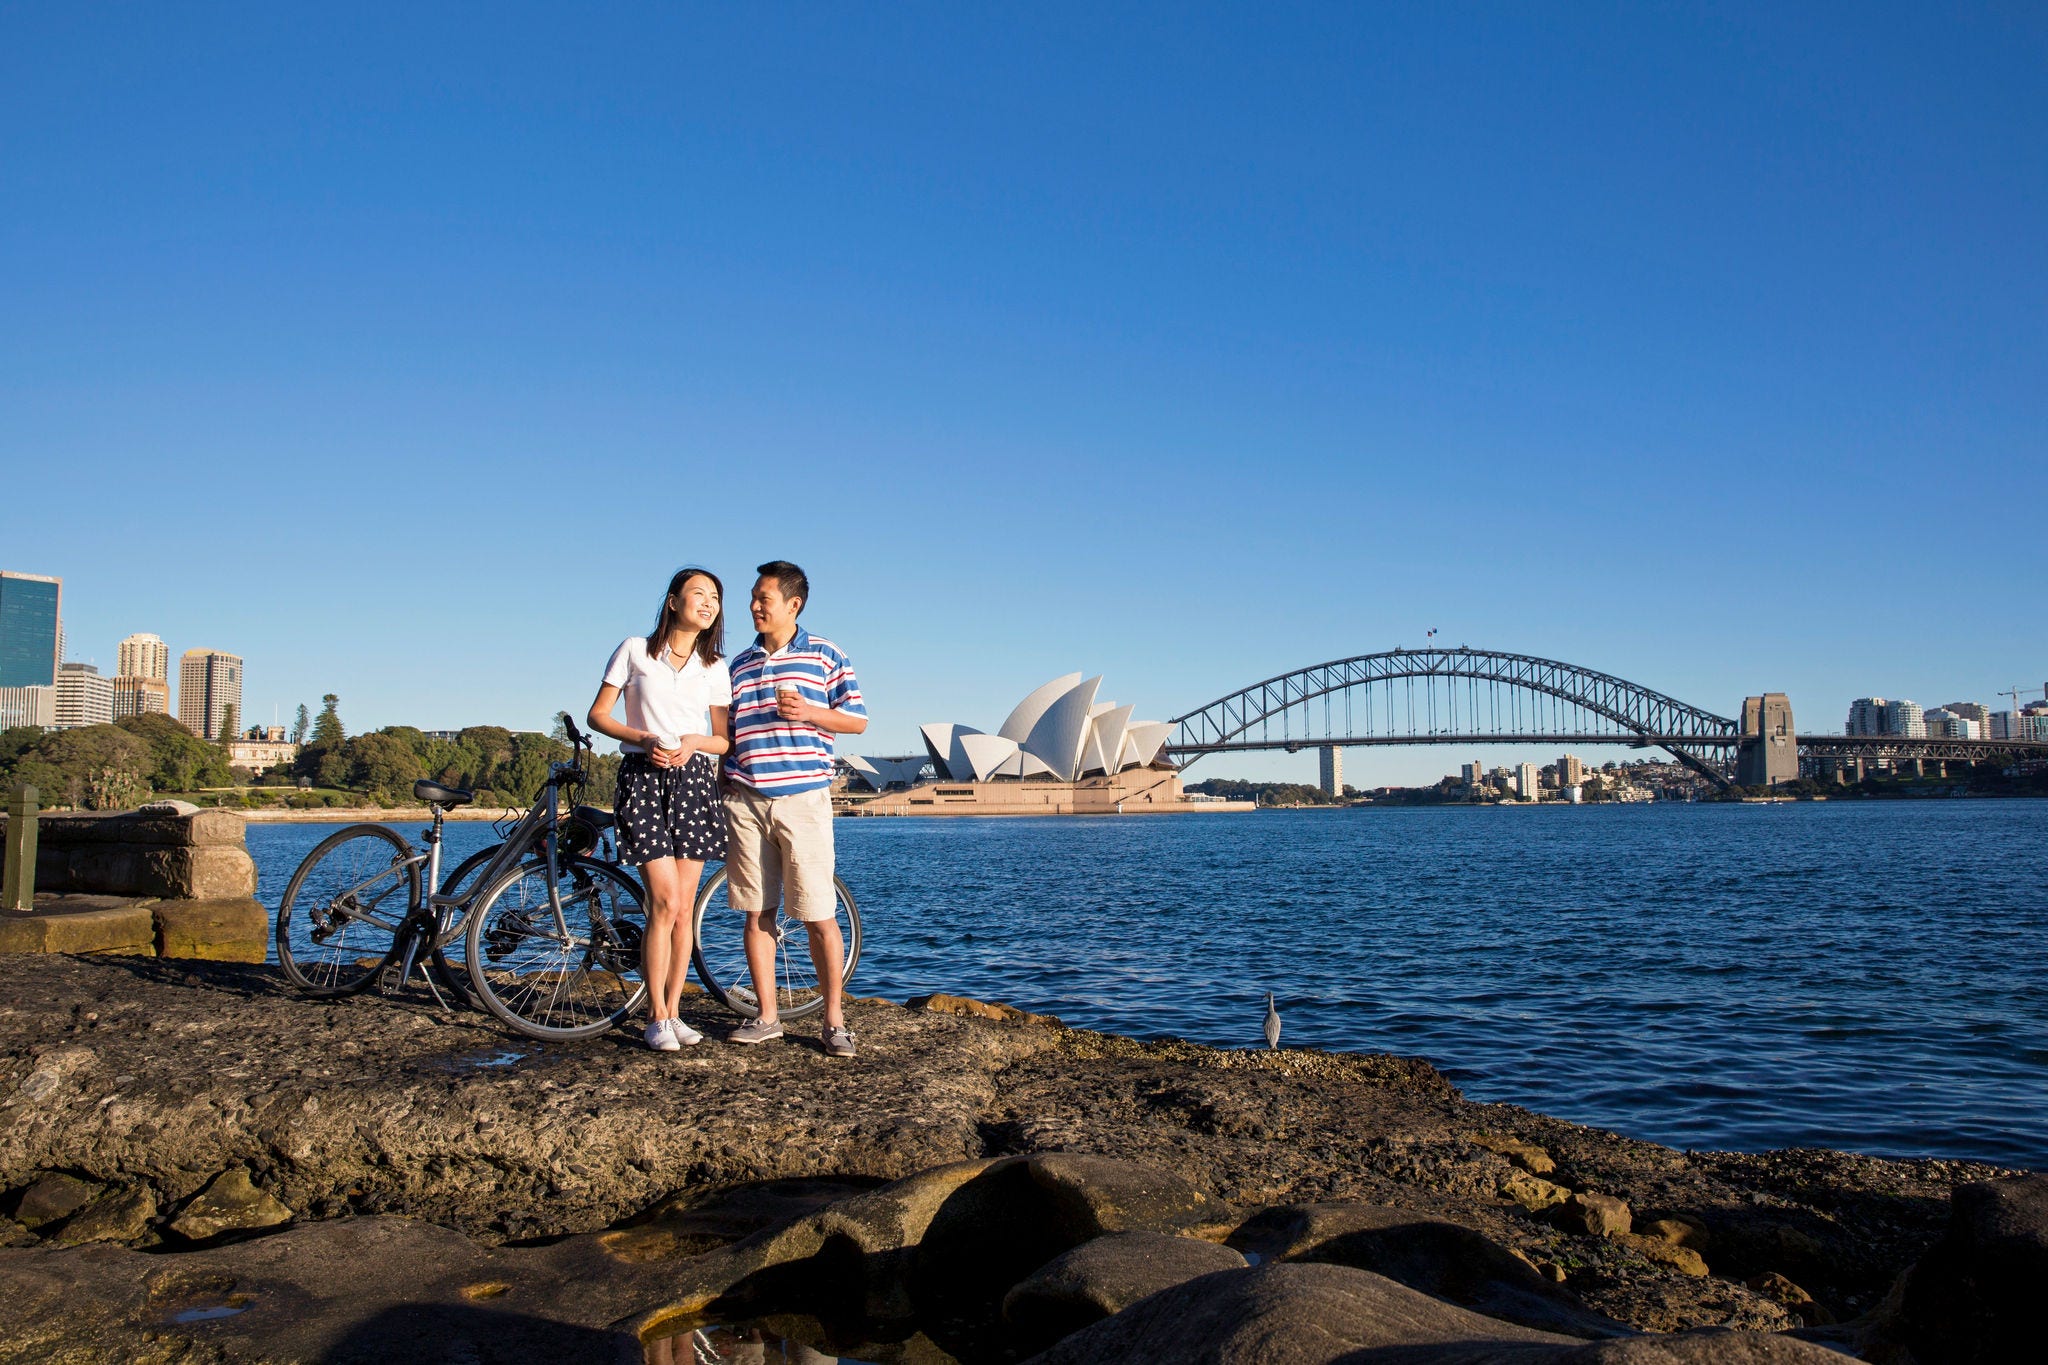 australia tourism demographics